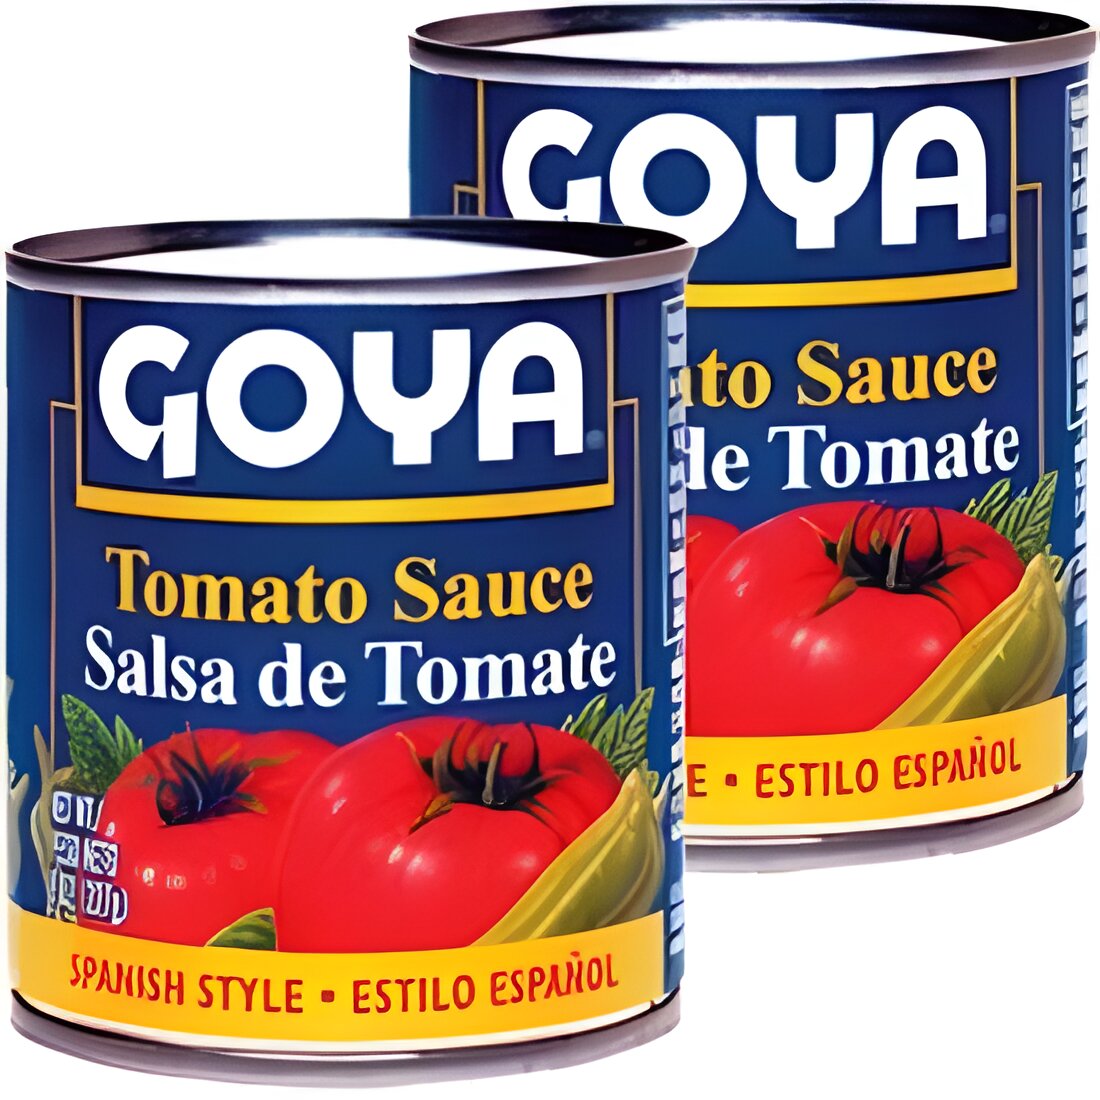 Free GOYA Tomato Sauce